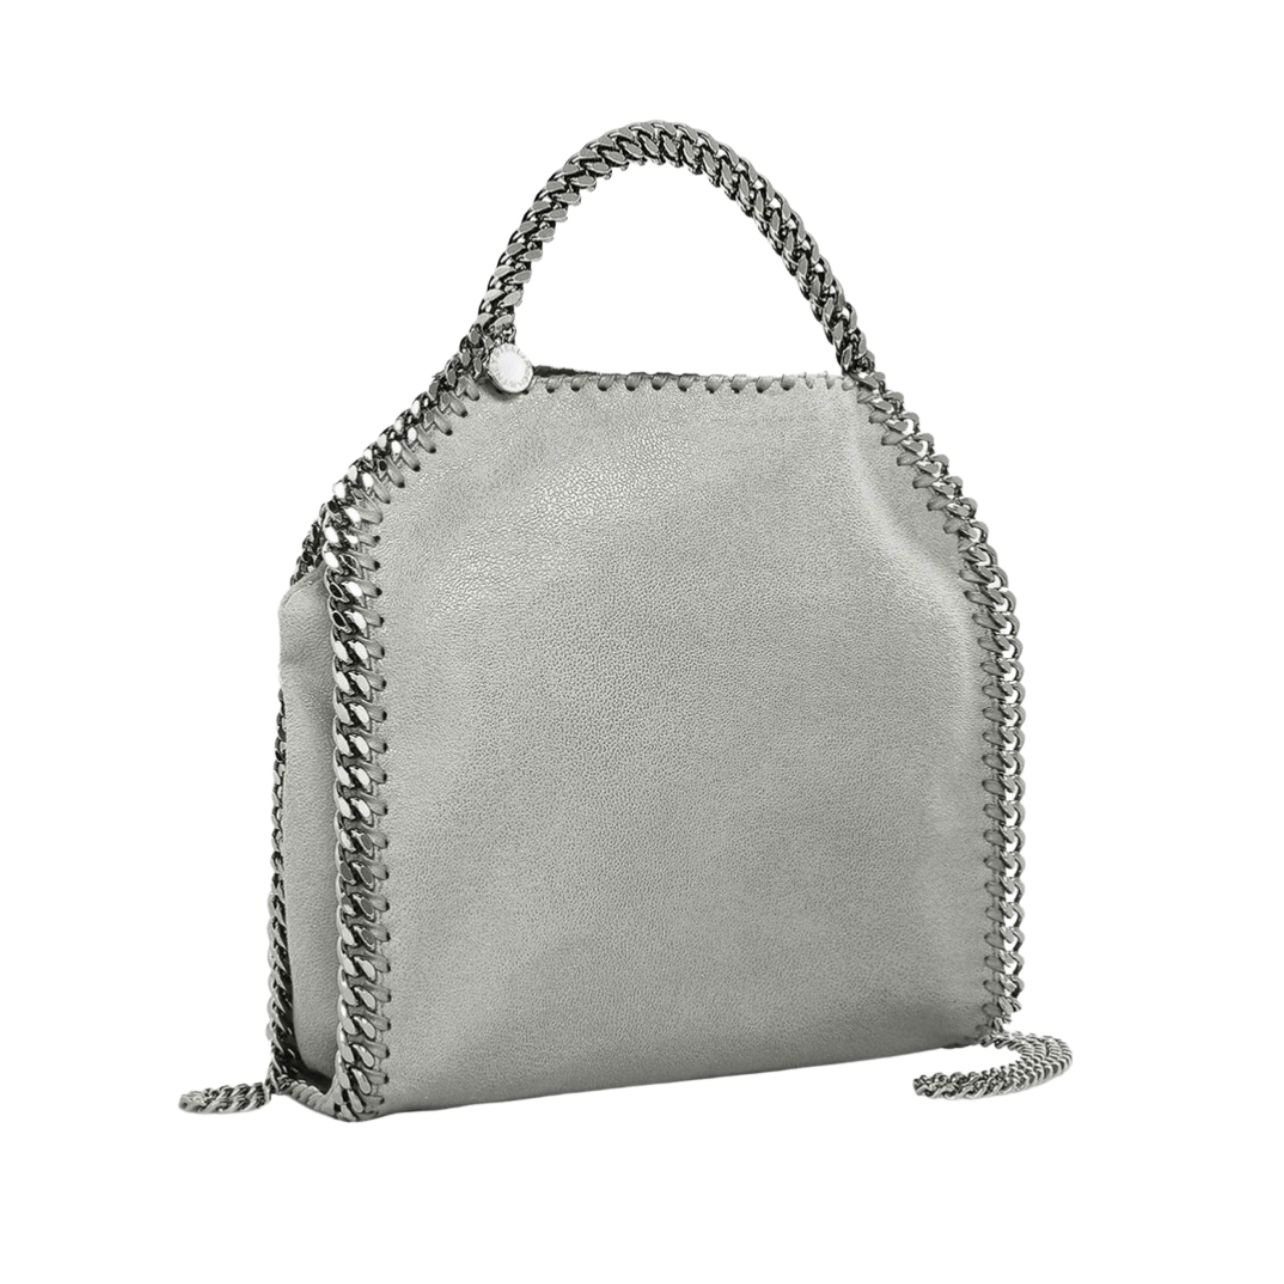 Light gray Stella McCartney crossbody bag